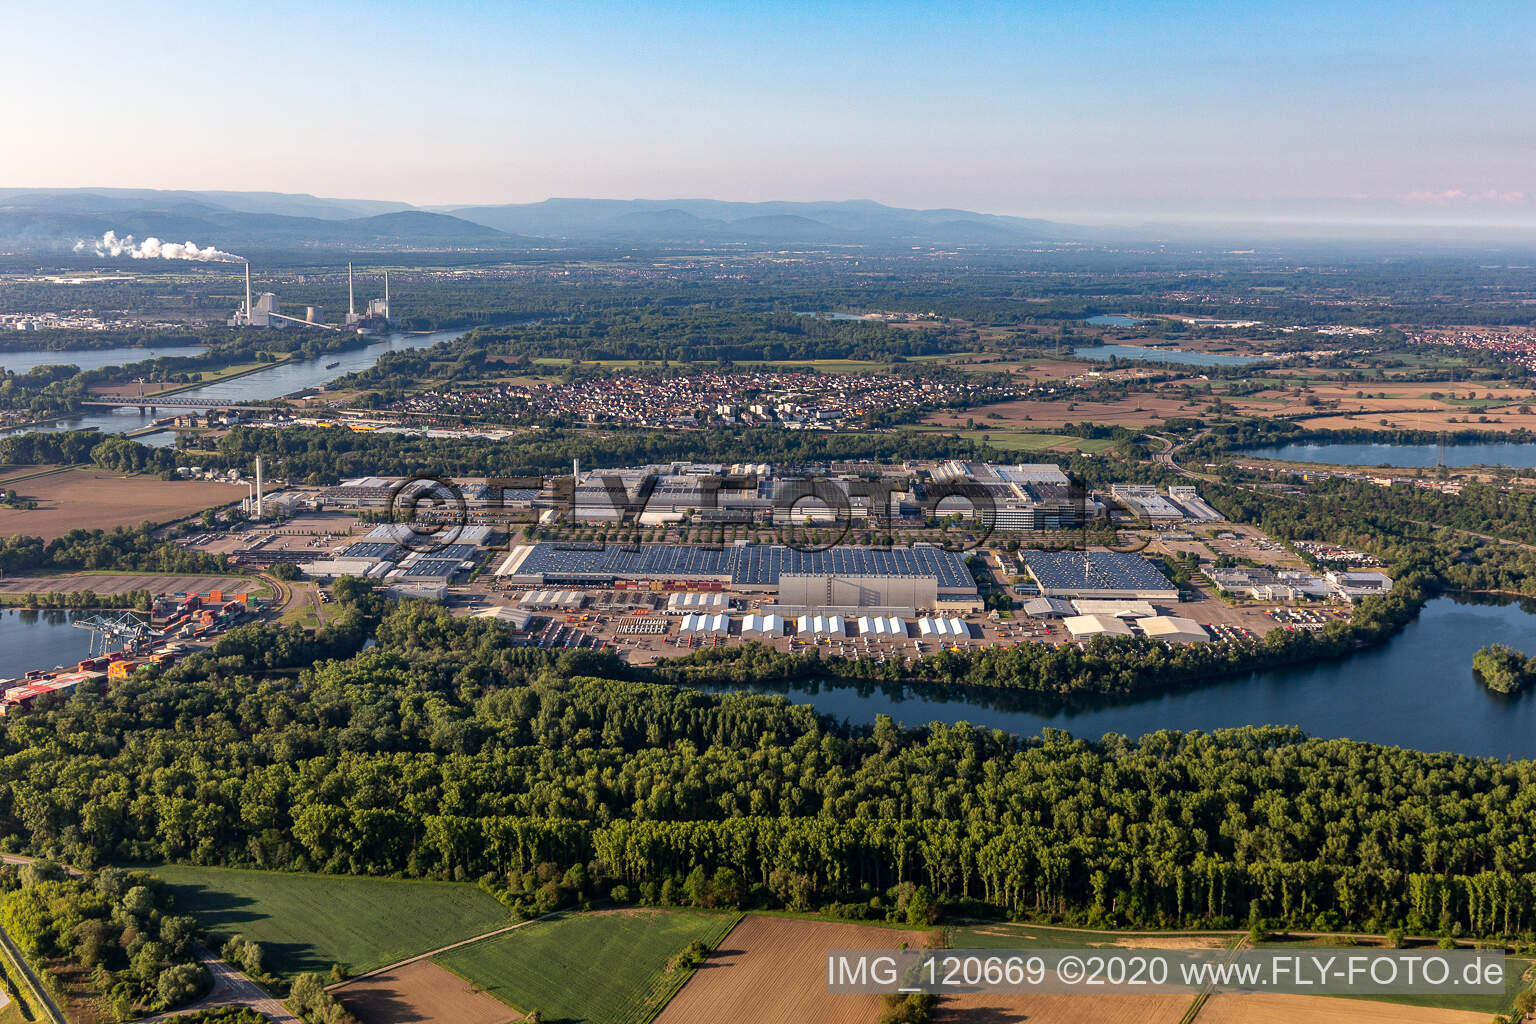 Daimler automobile plant in Wörth in Wörth am Rhein in the state Rhineland-Palatinate, Germany